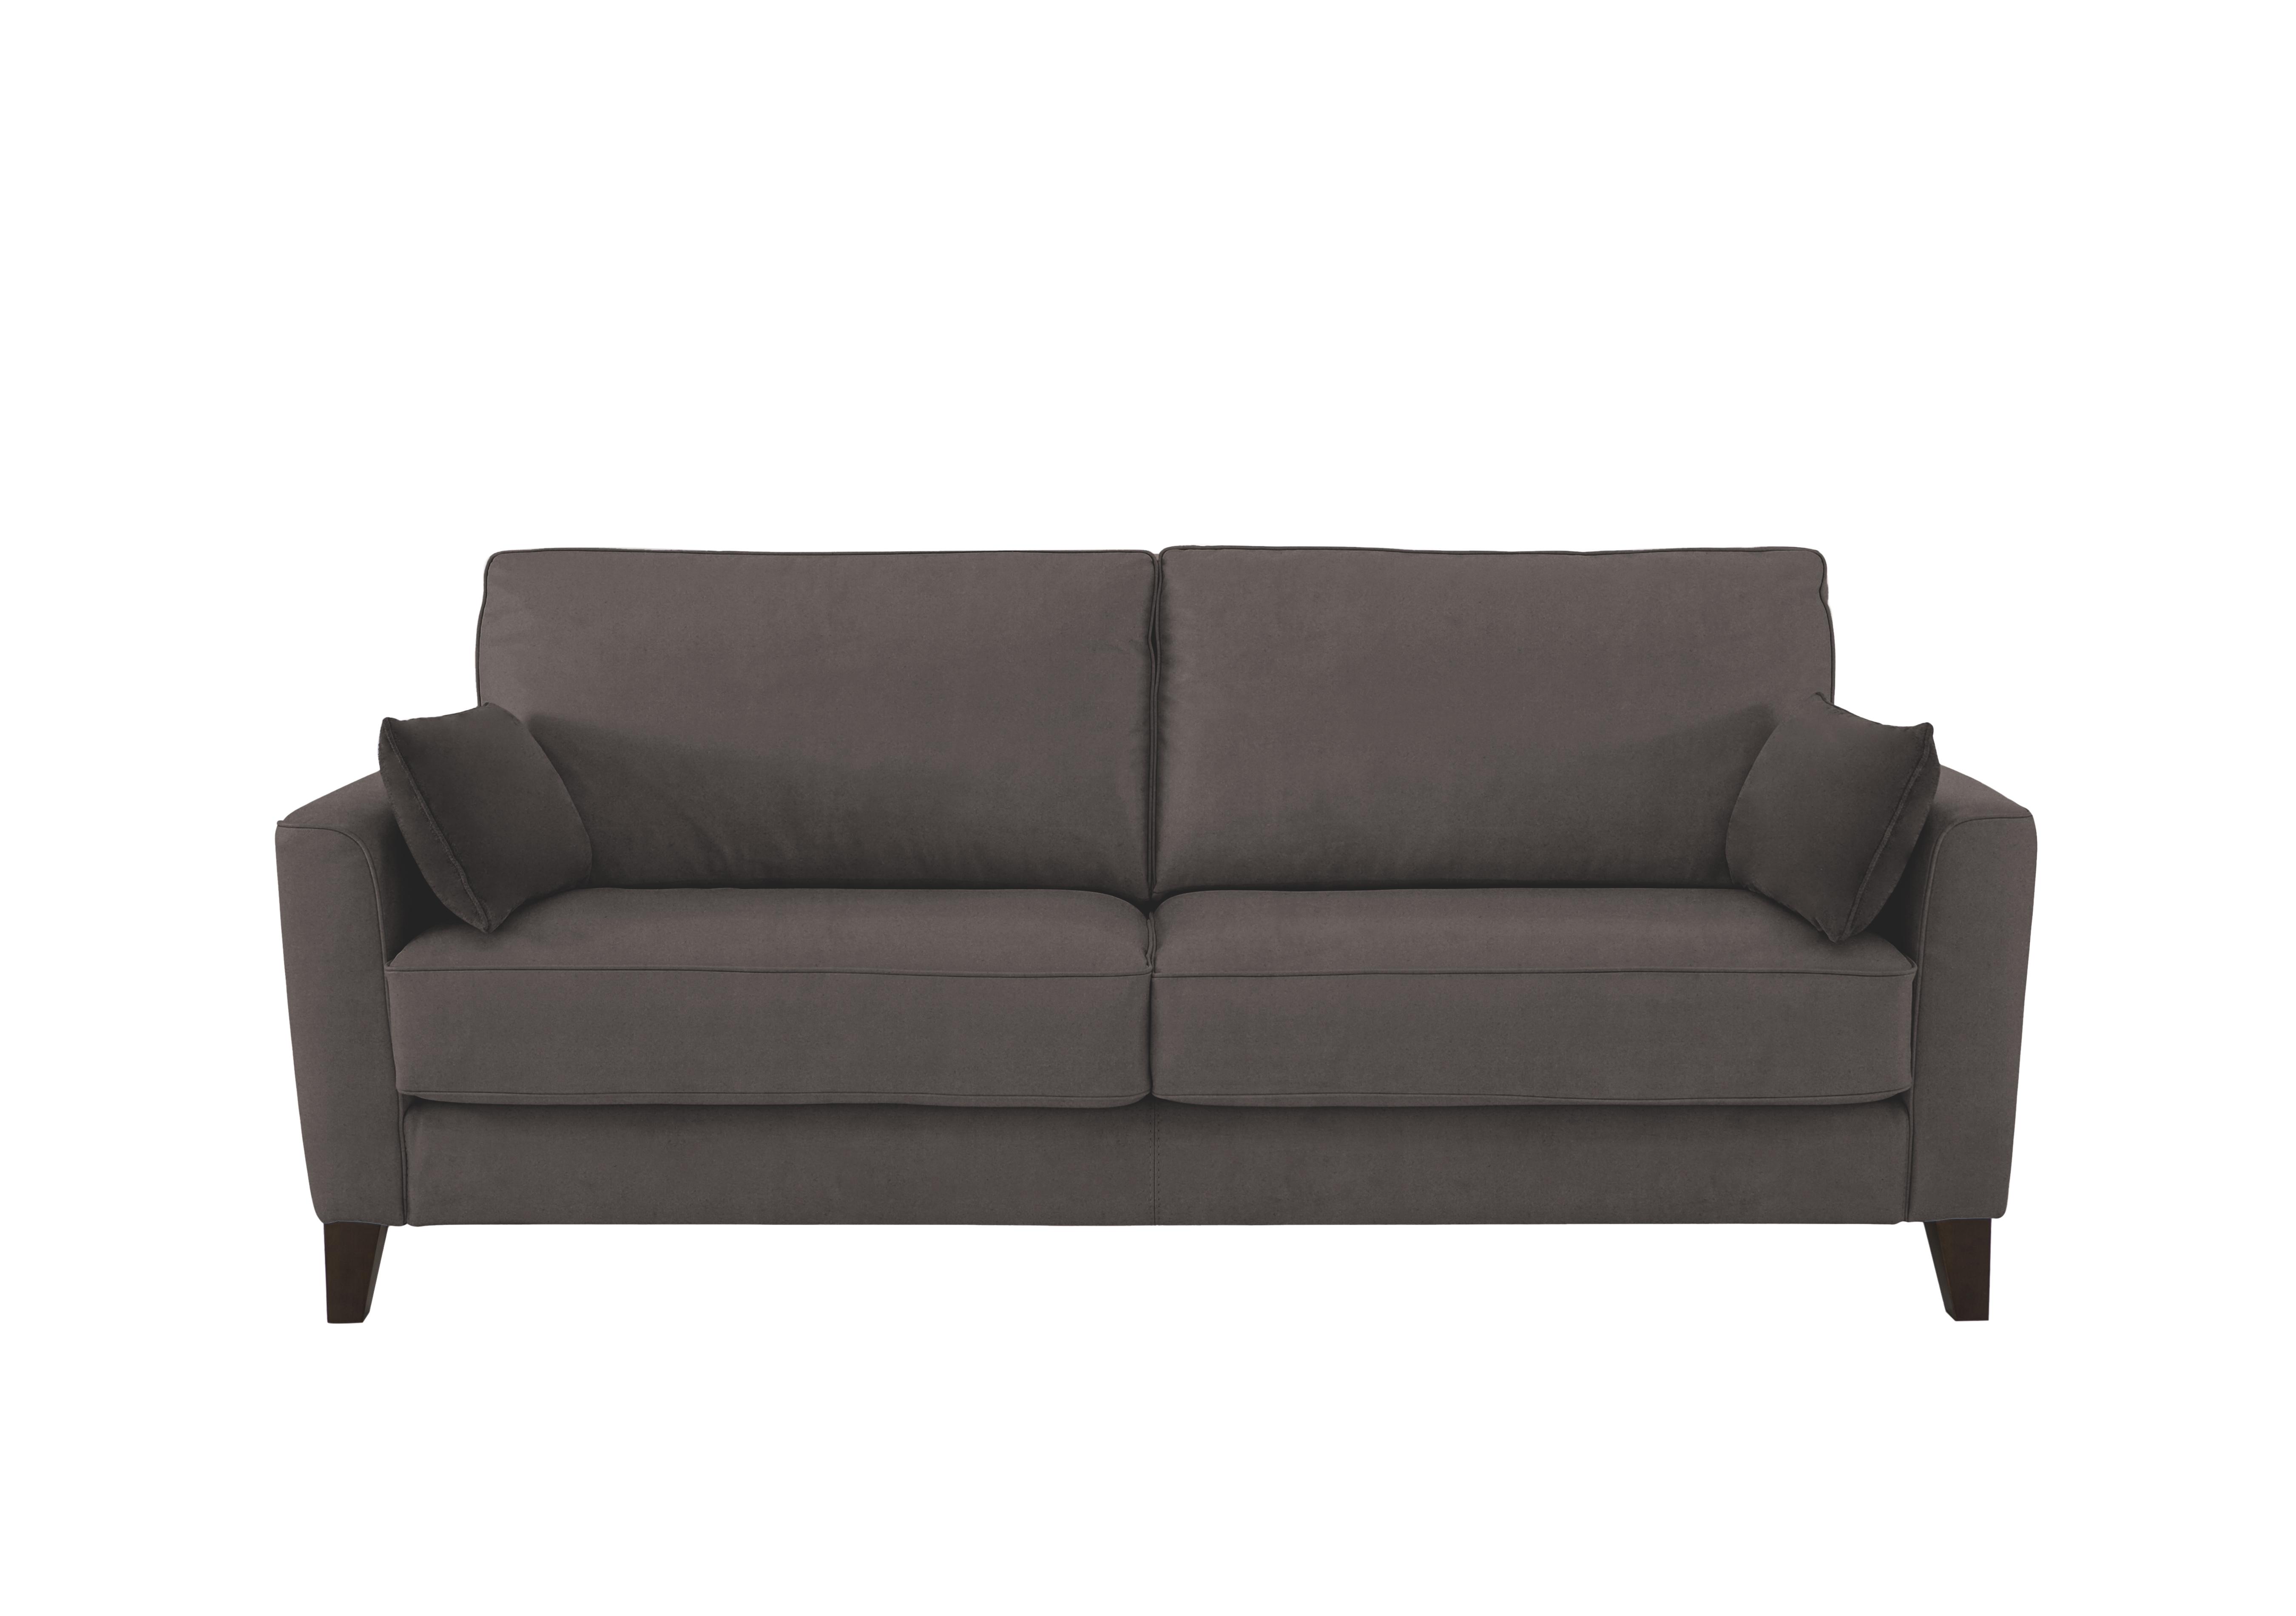 Brondby 3 Seater Fabric Sofa in Bfa-Bljr16 Grey on Furniture Village